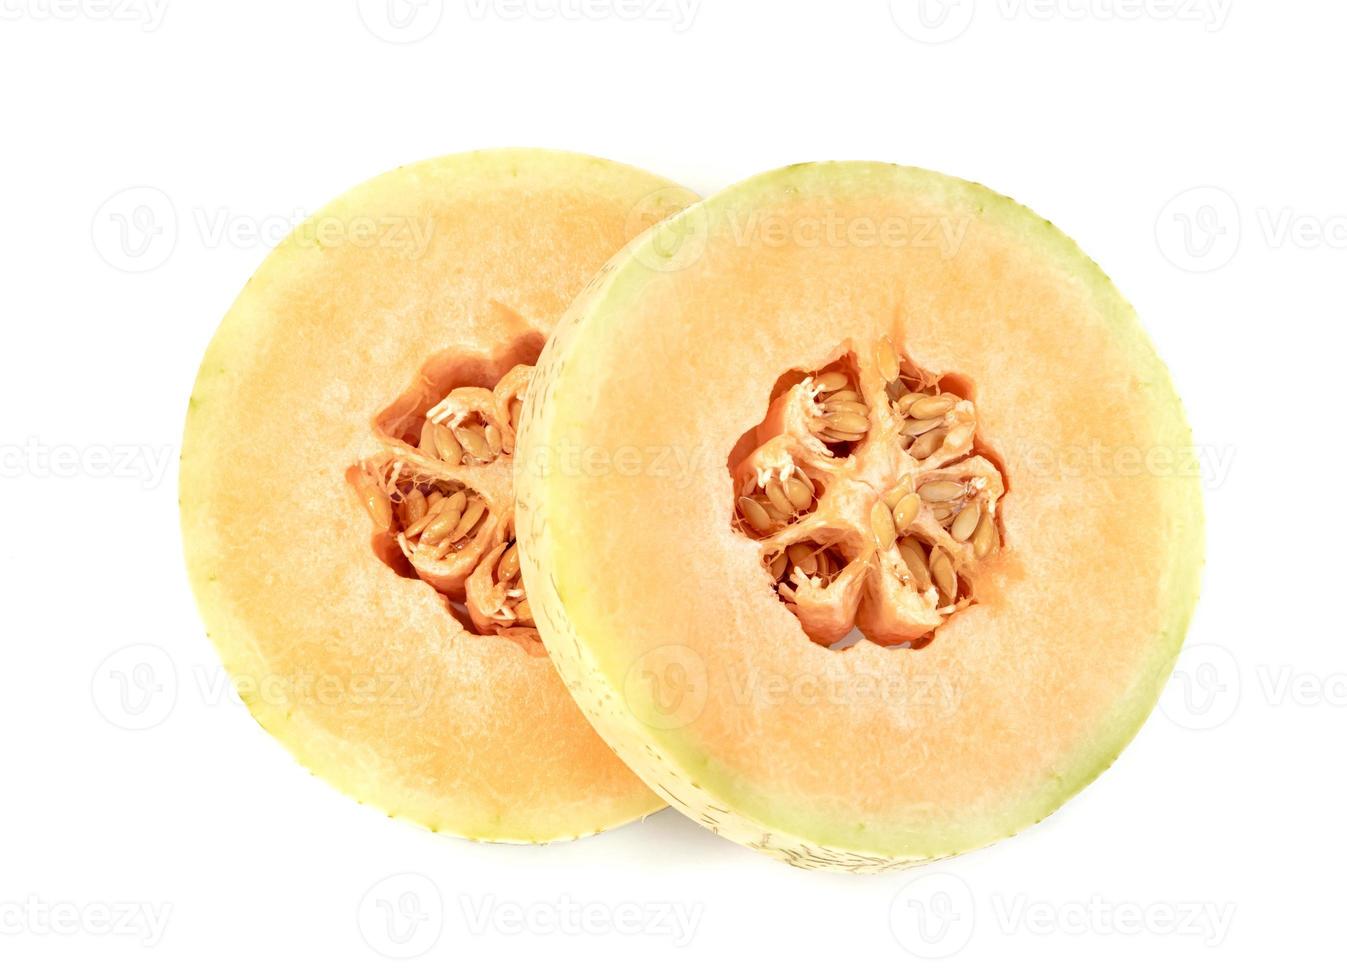 Fruta de melón melón naranja en rodajas aislado sobre fondo blanco. foto